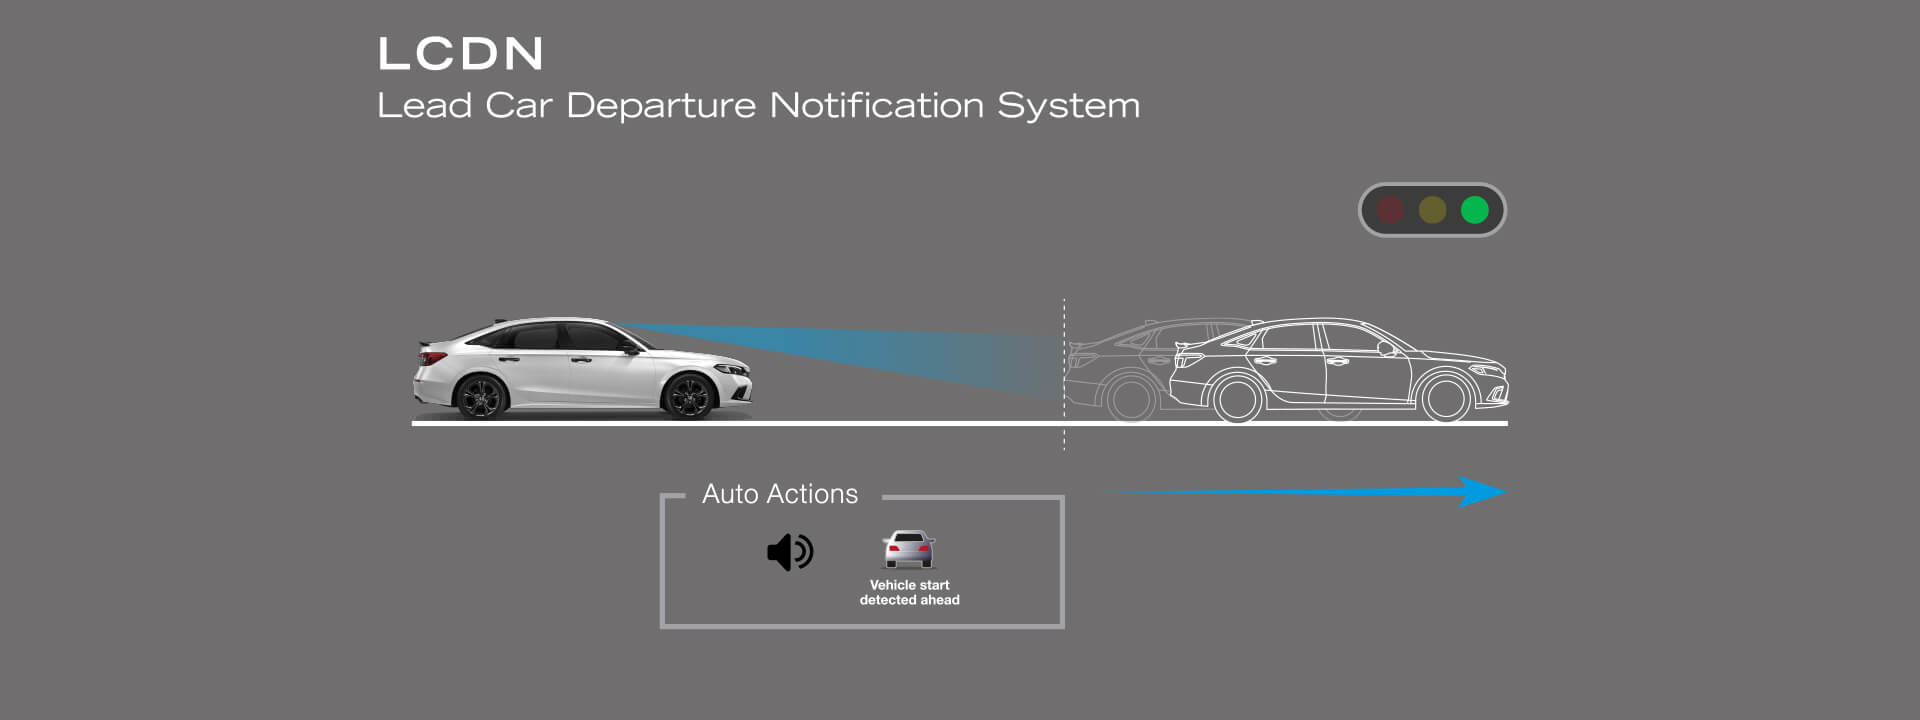 Lead Car Departure Notification System (LCDN) ระบบเตือนเมื่อรถคันหน้าเคลื่อนที่